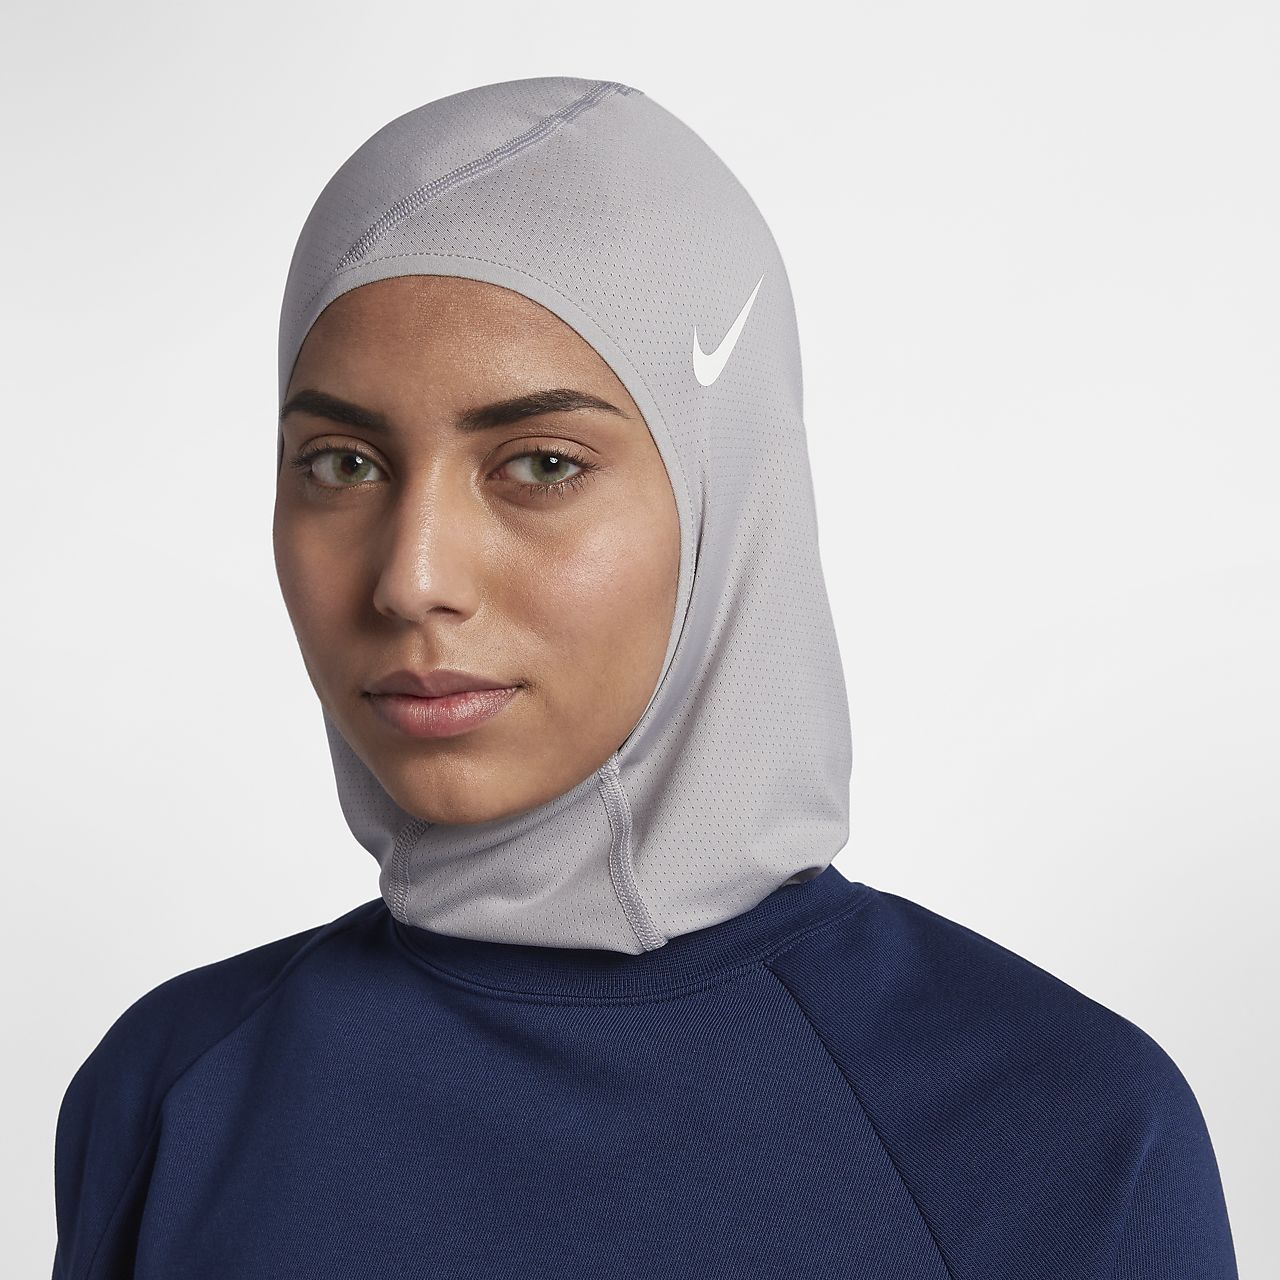  Nike  Pro Women s Hijab Nike  com SG